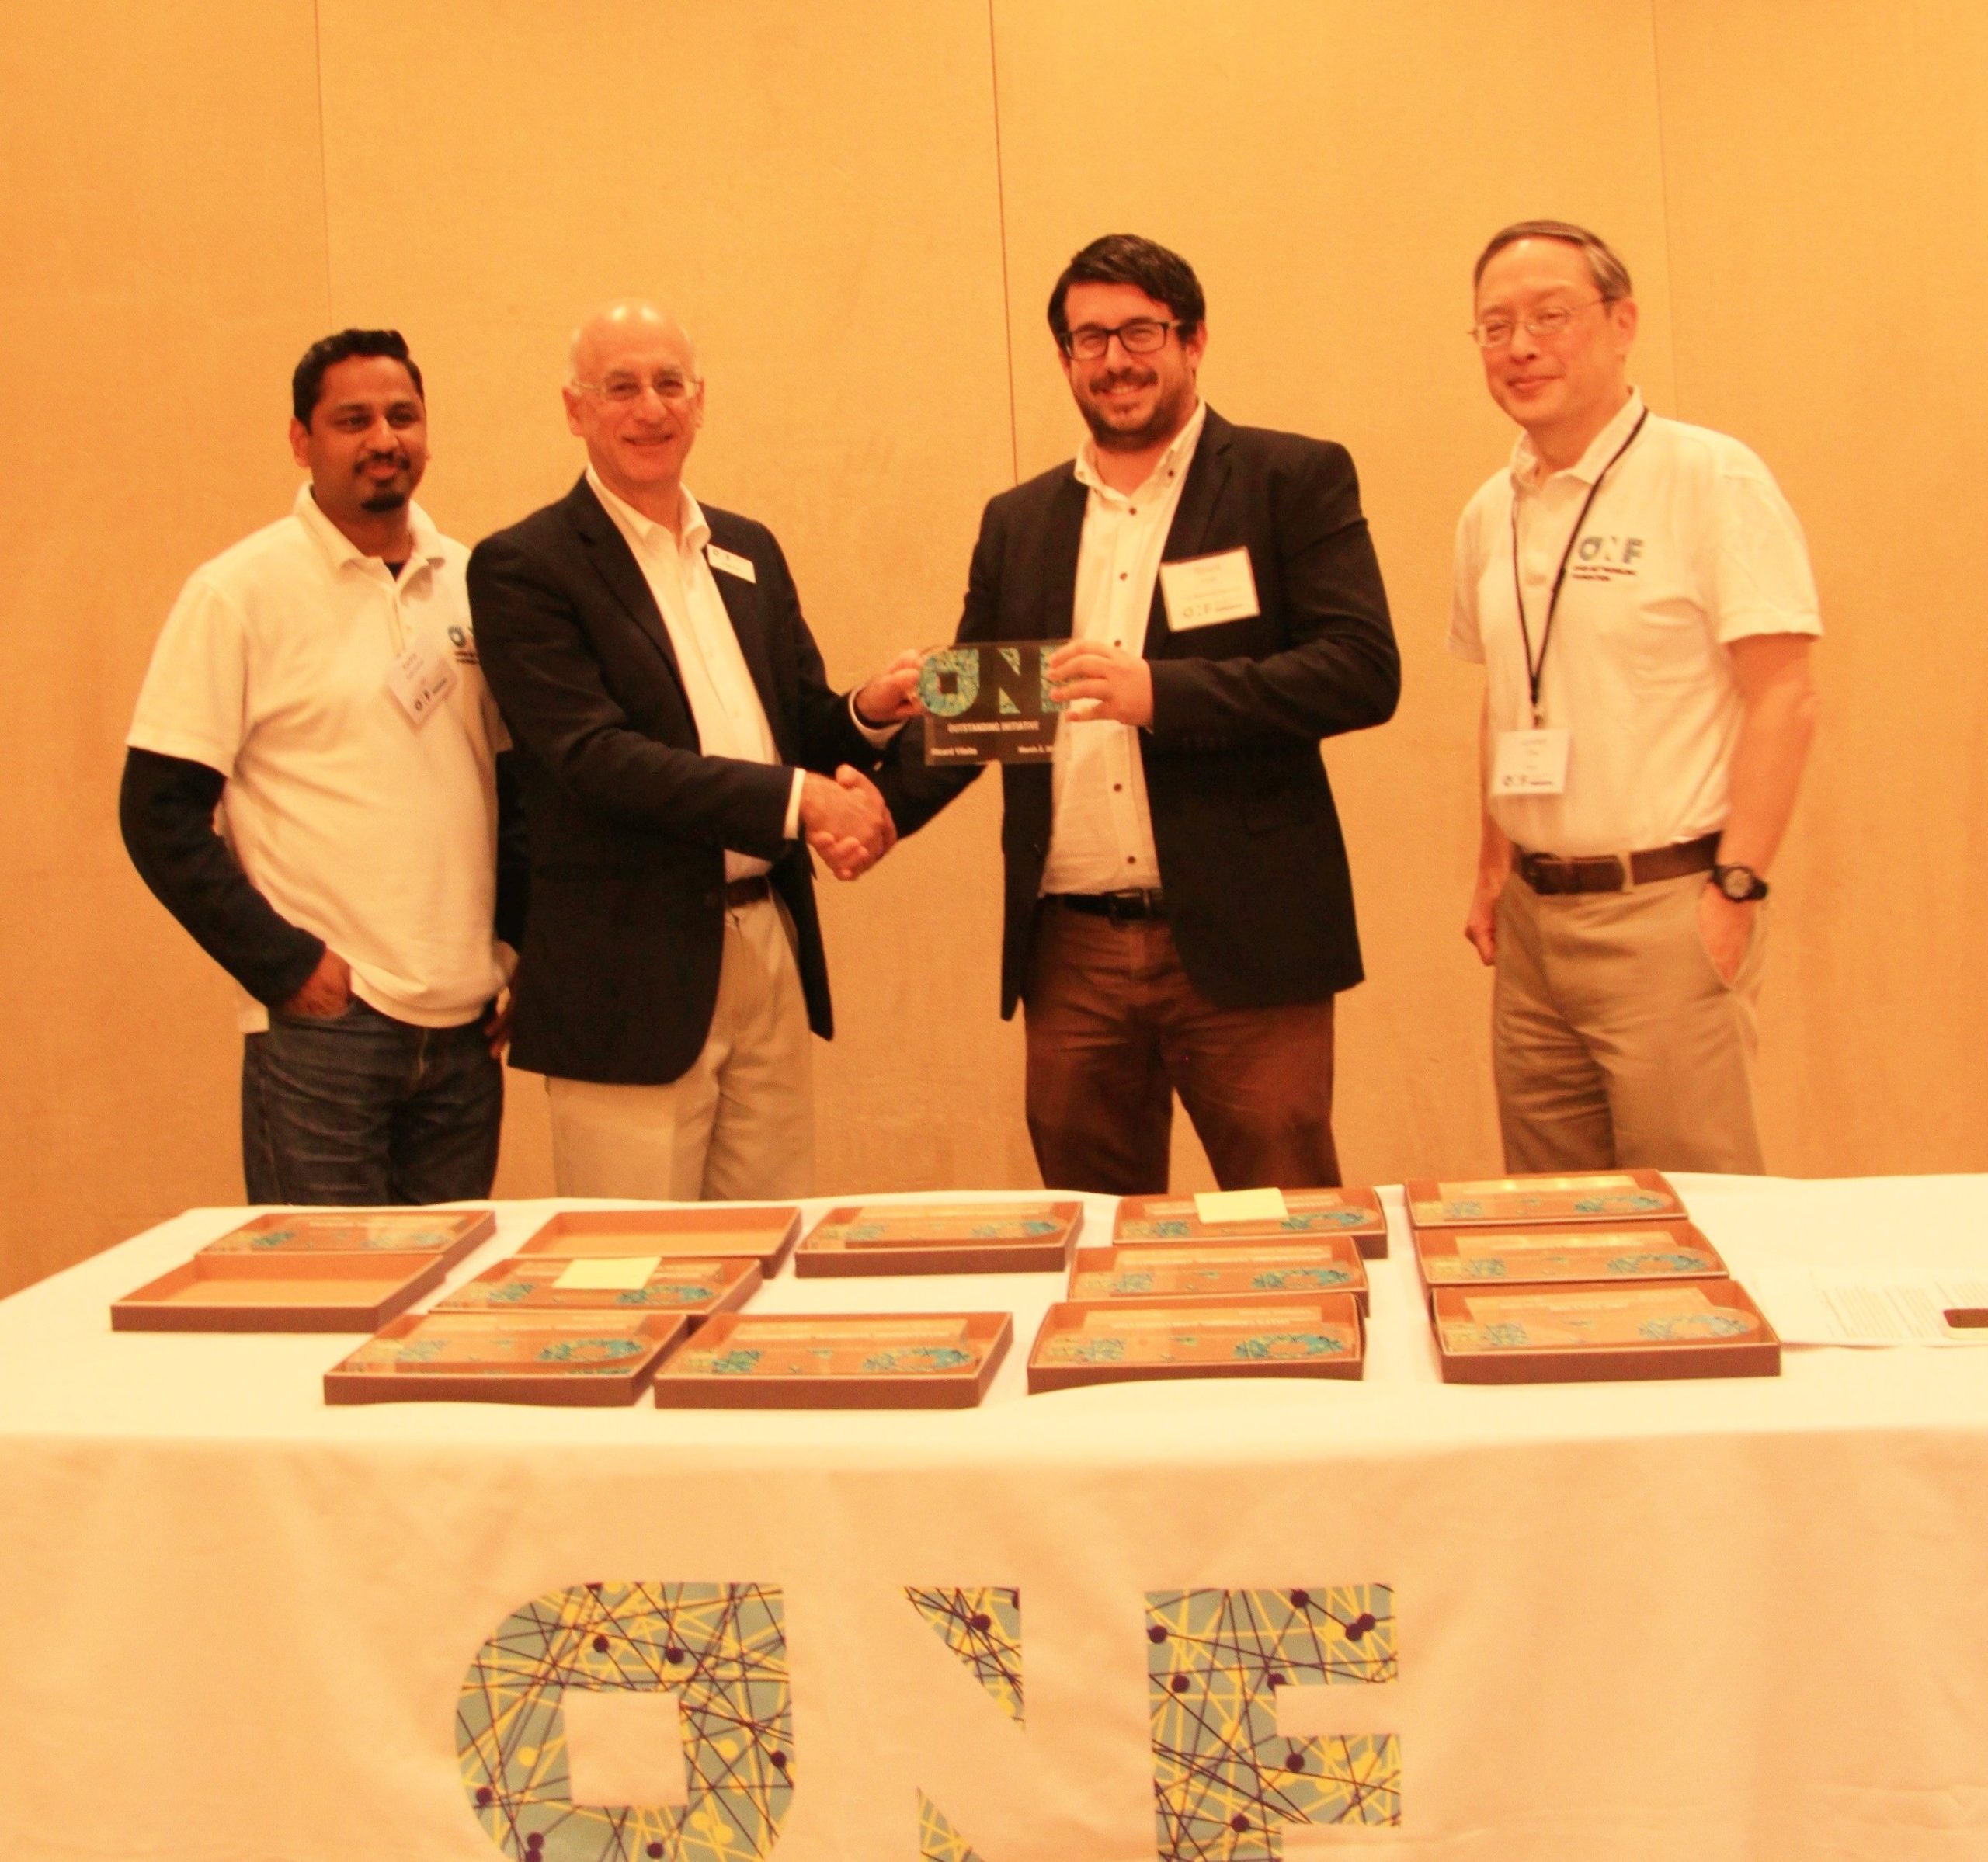 Front left to right: Karthik Sethuraman (NEC), Dan Pitt (ONF Executive Director), Ricard Vilalta (CTTC), Lyndon Ong (Ciena)